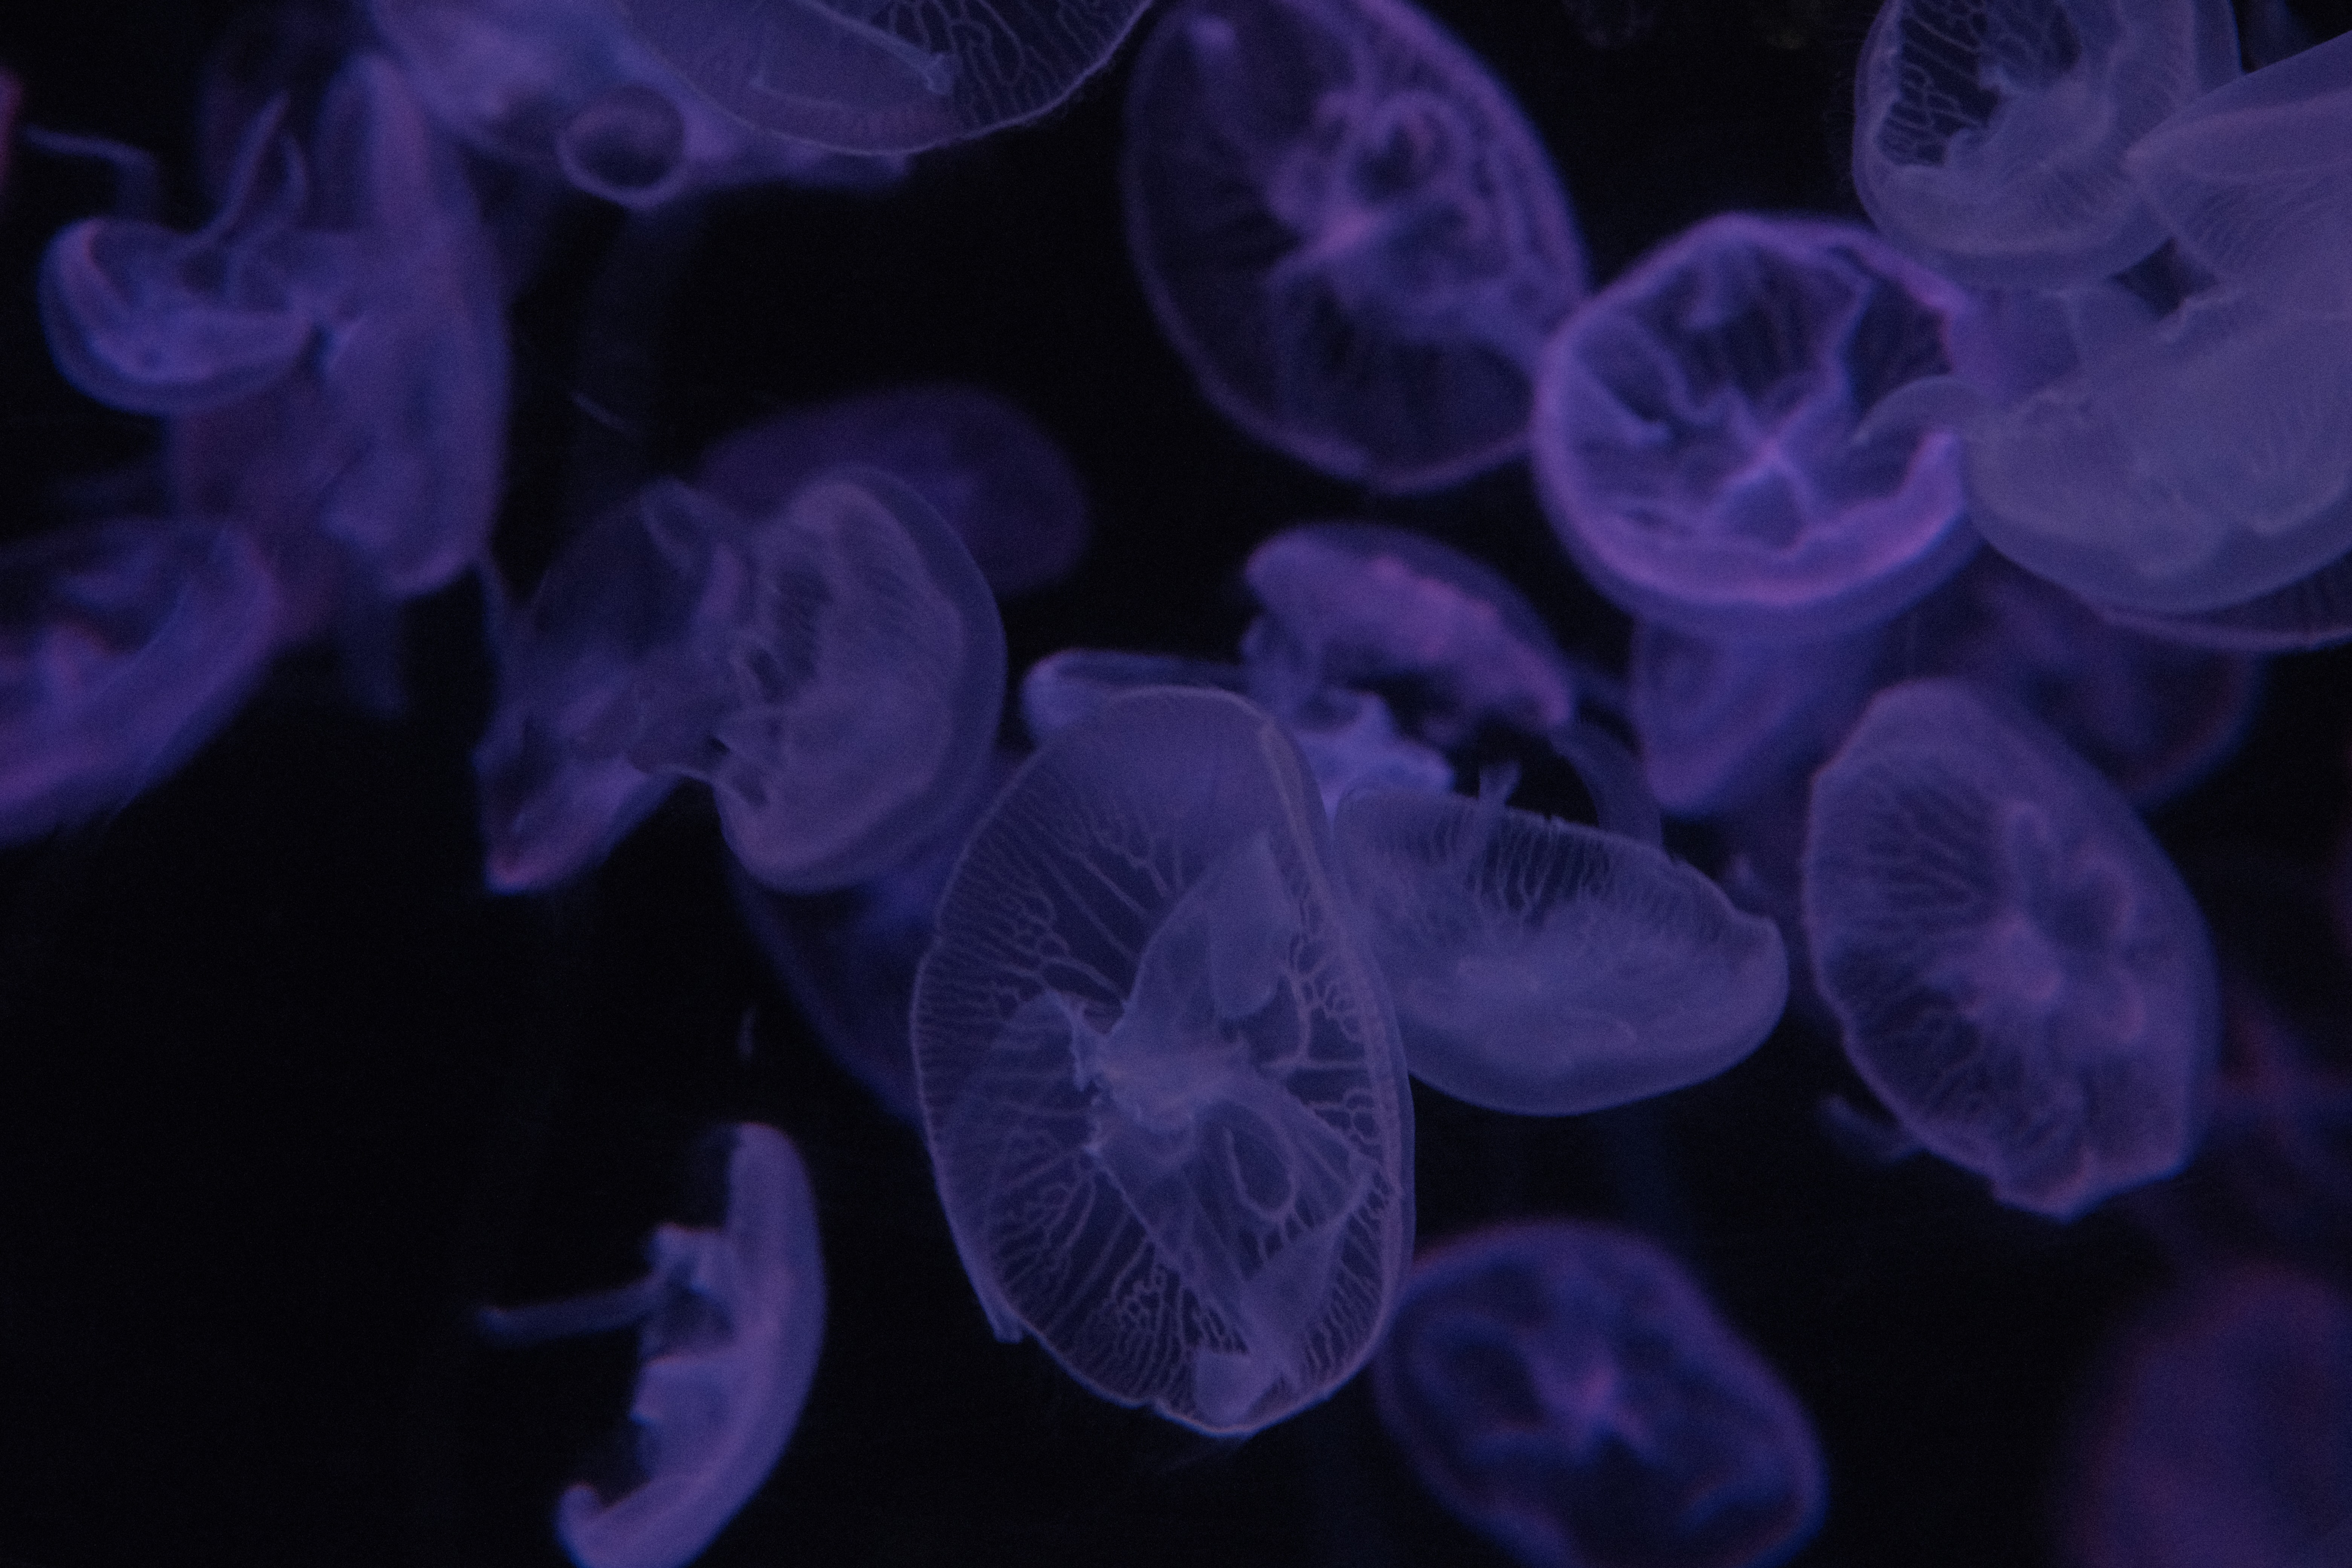 jellyfish, violet, dark, purple, handsomely, it's beautiful